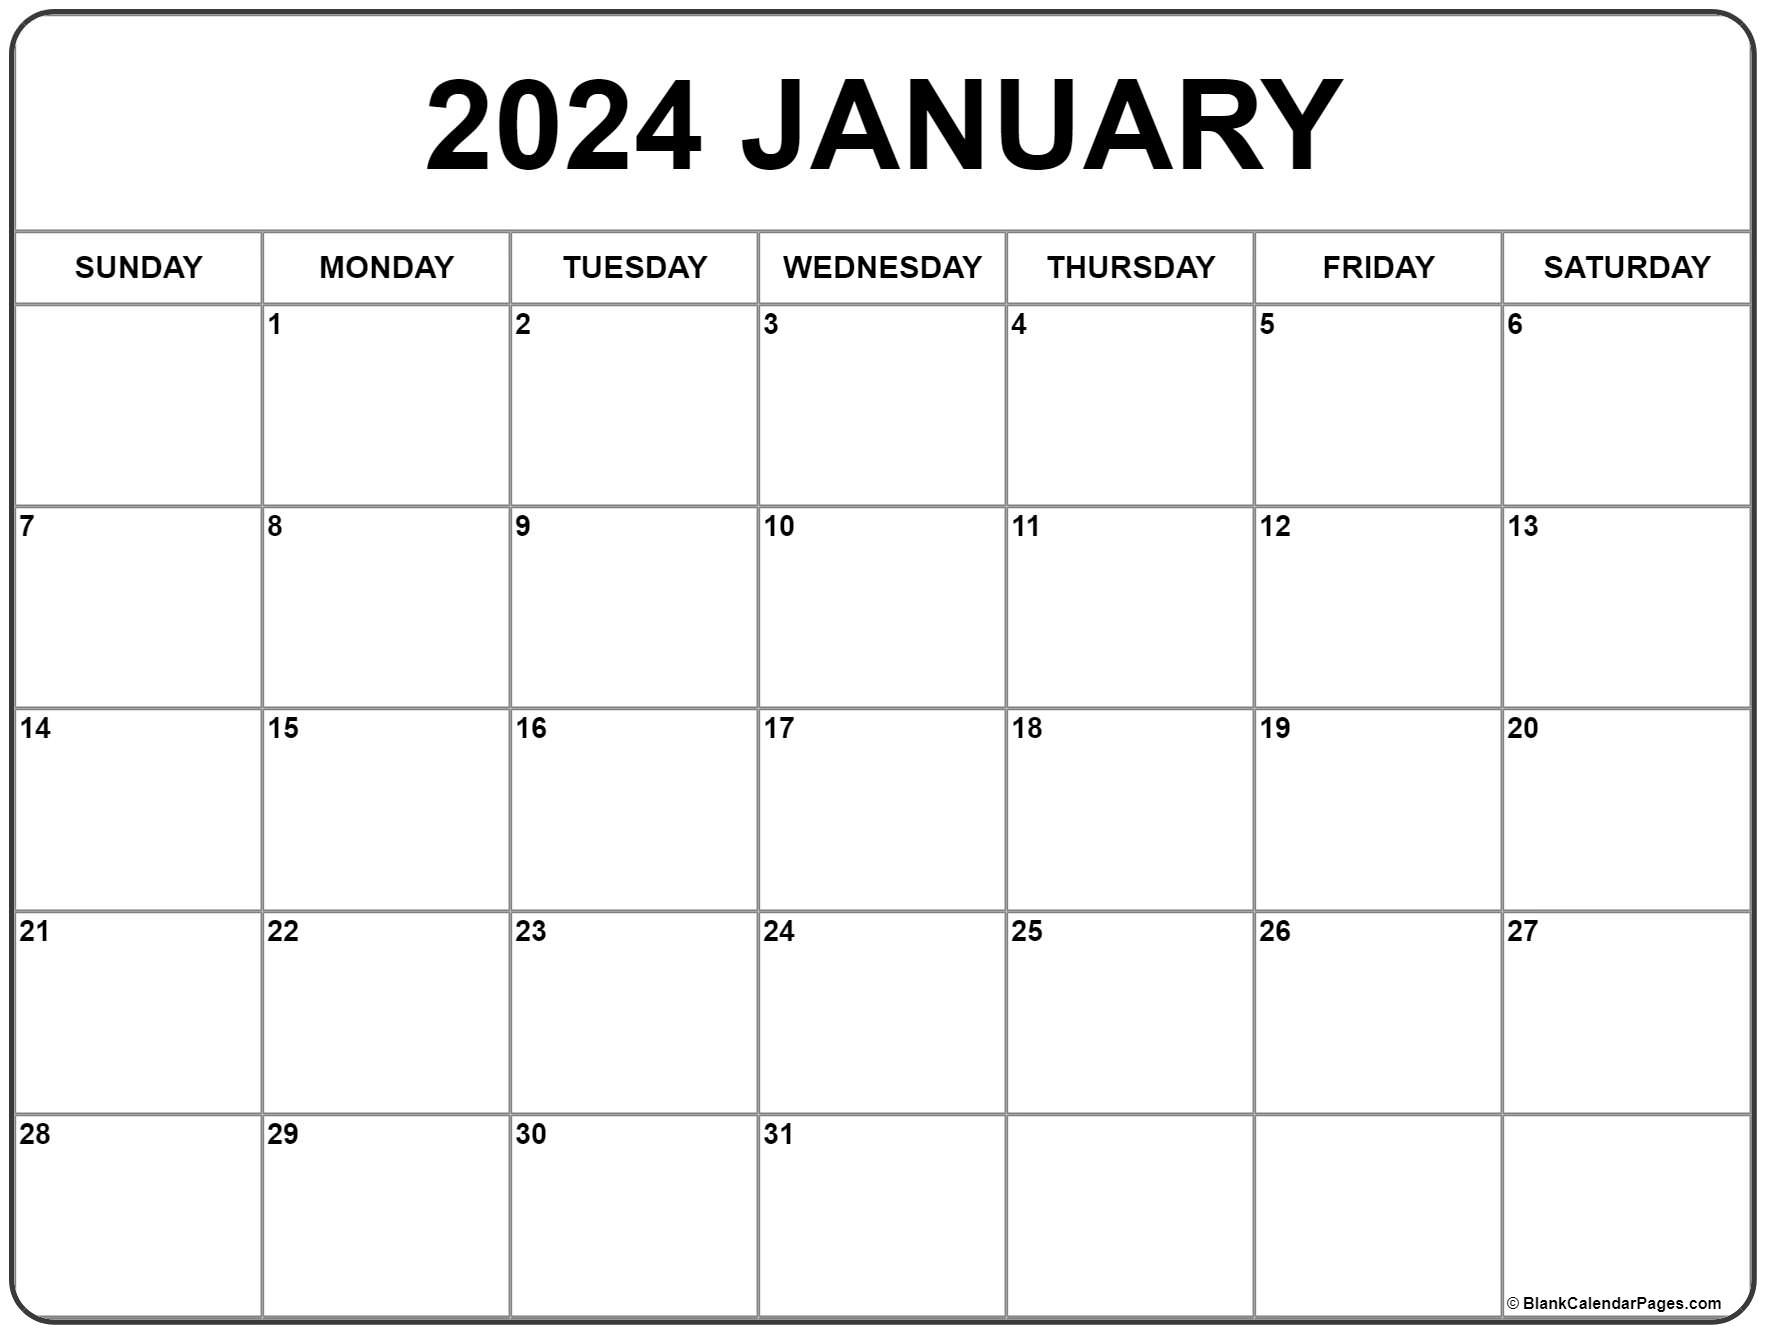 January 2024 Calendar | Free Printable Calendar for January 2024 Calendar Blank Printable